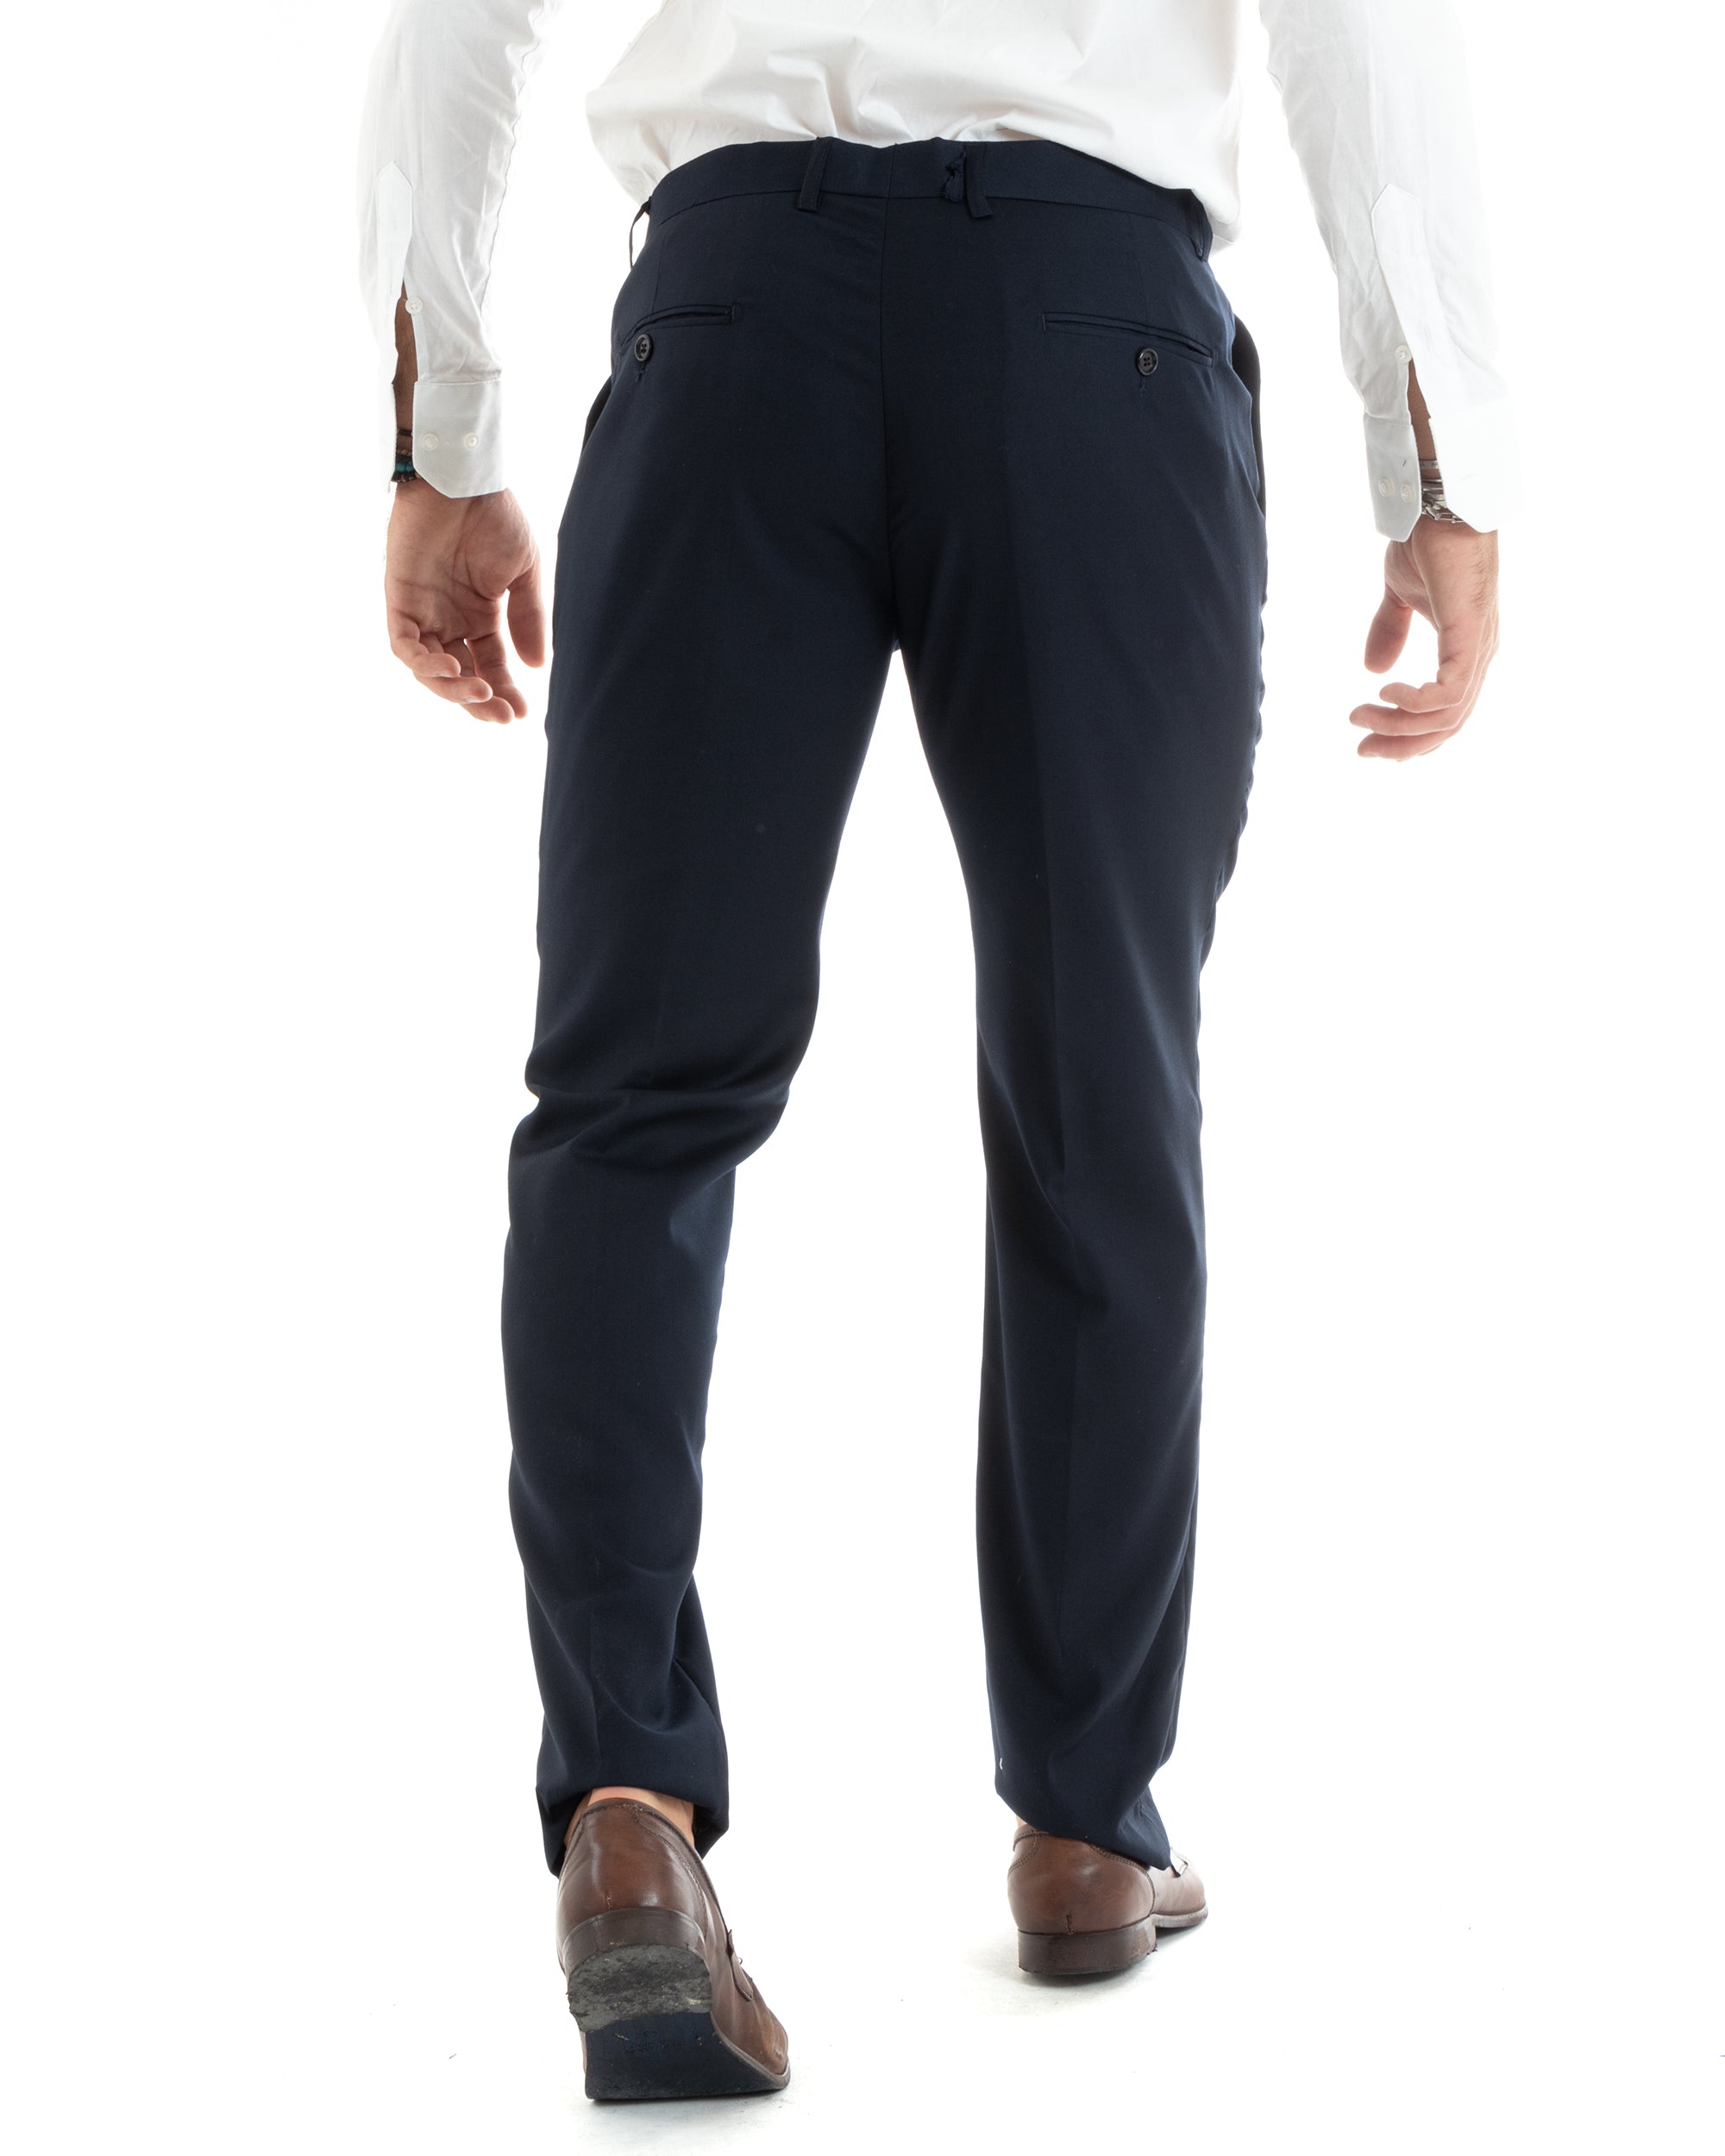 Abito Uomo Monopetto Vestito Smoking Rever Raso Completo Giacca Pantaloni Blu Elegante GIOSAL-OU2425A